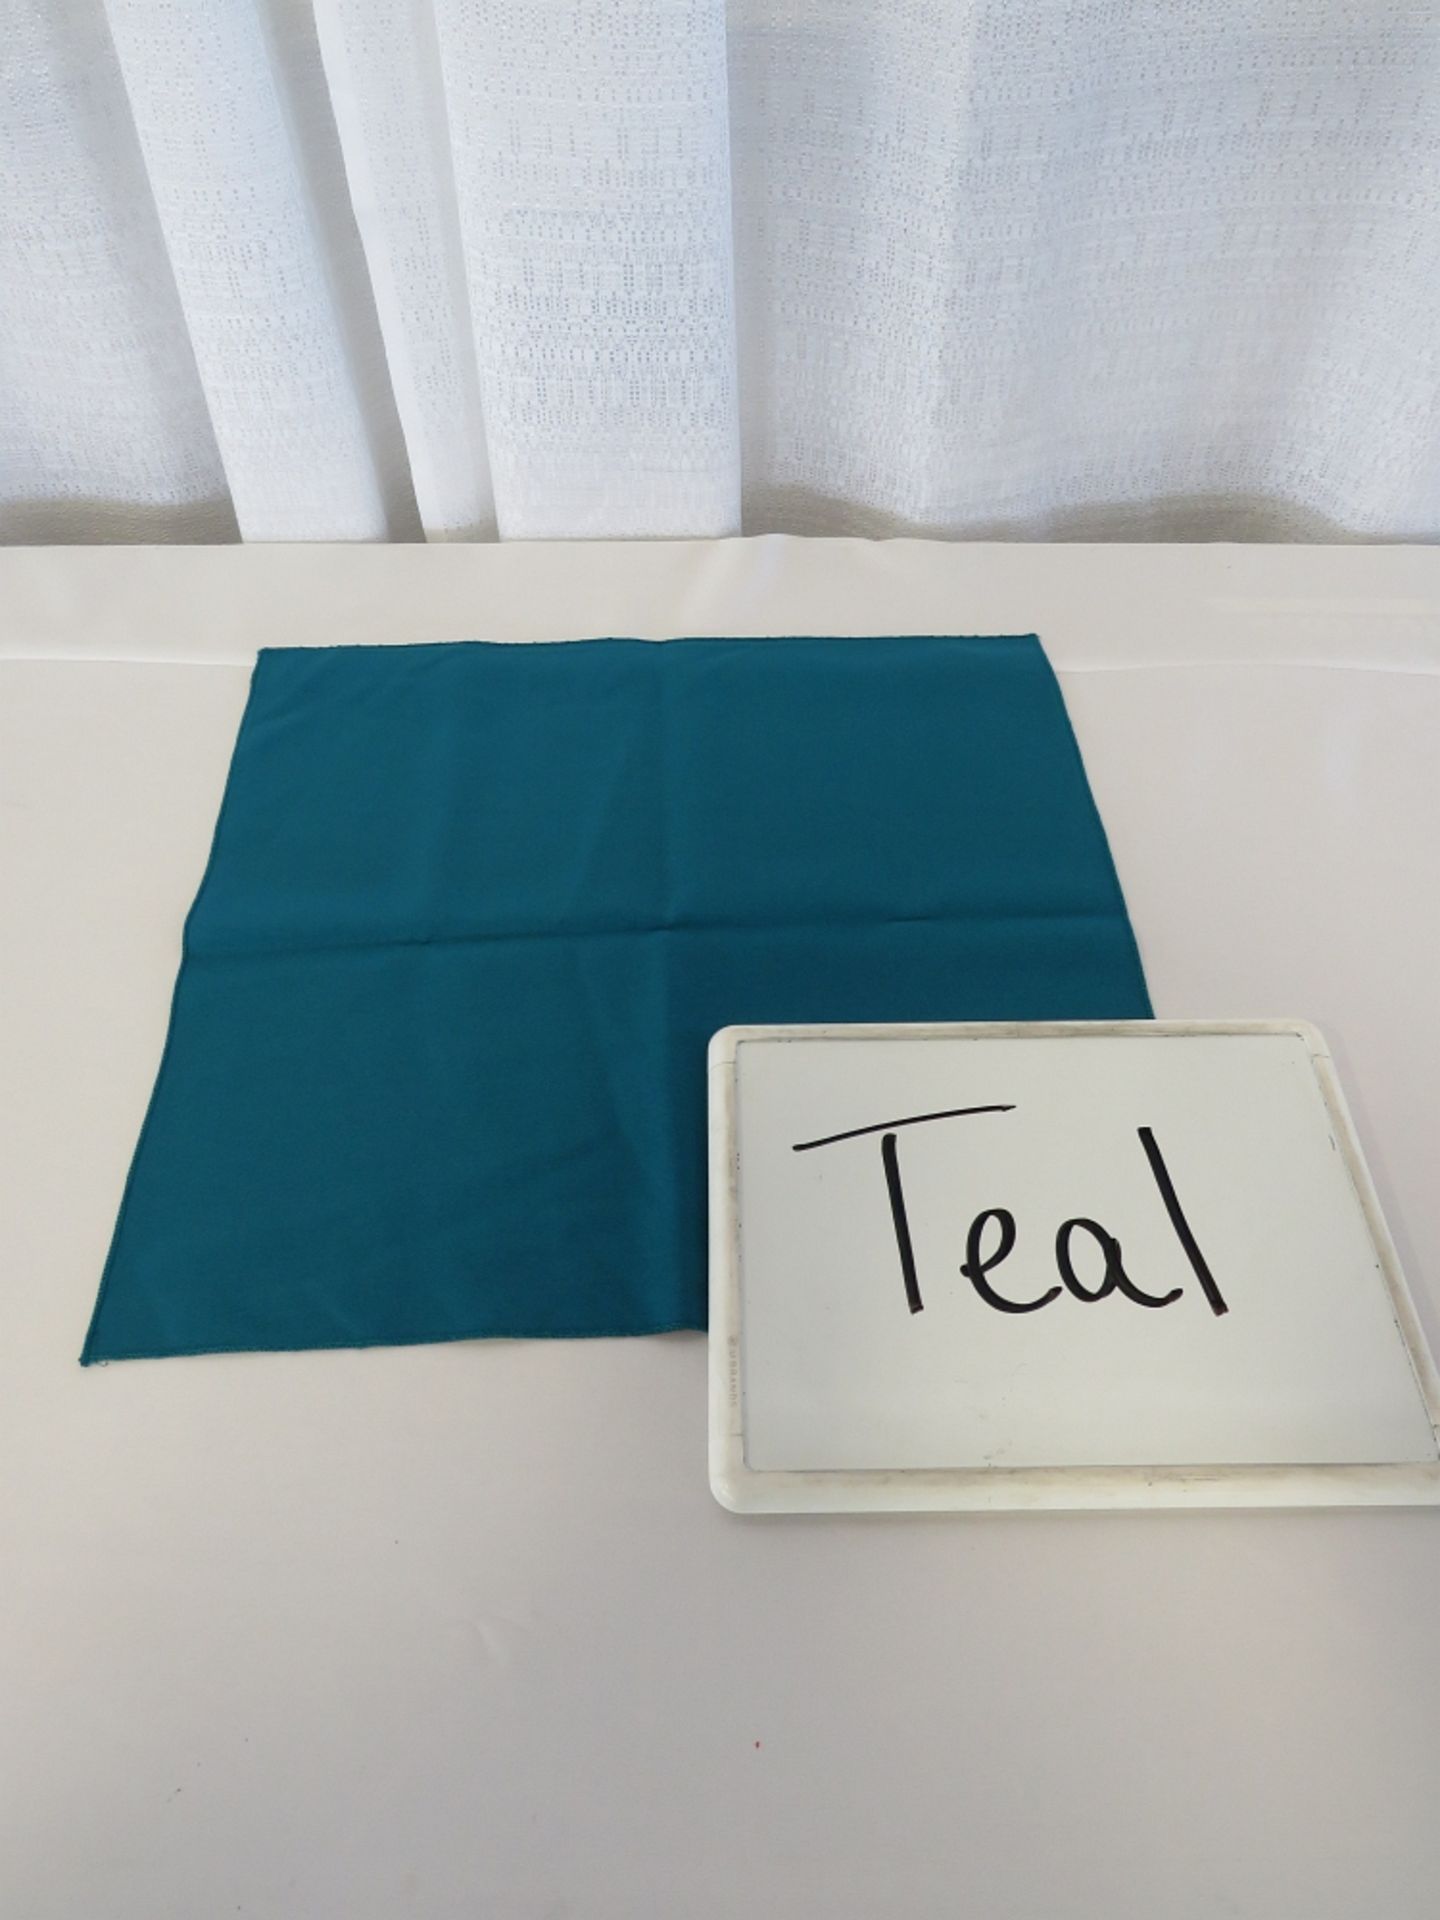 60" x 60" Tablecloth, Teal